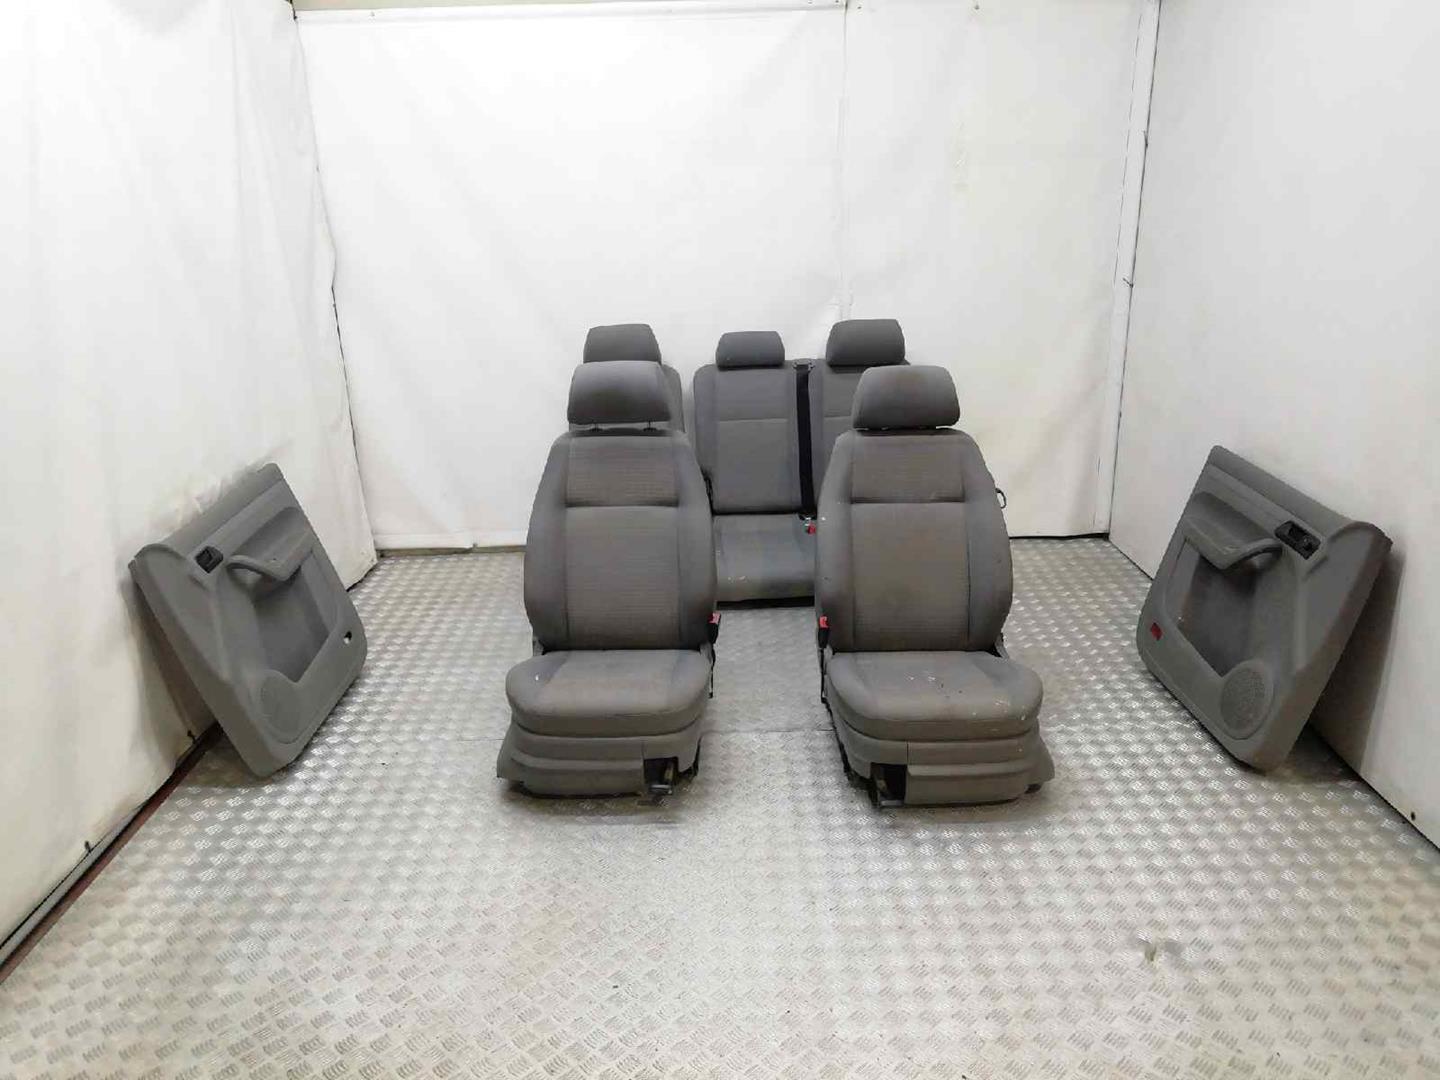 VOLKSWAGEN Caddy 3 generation (2004-2015) Seats ASIENTOSTELA, ASIENTOSMANUALES 19890963